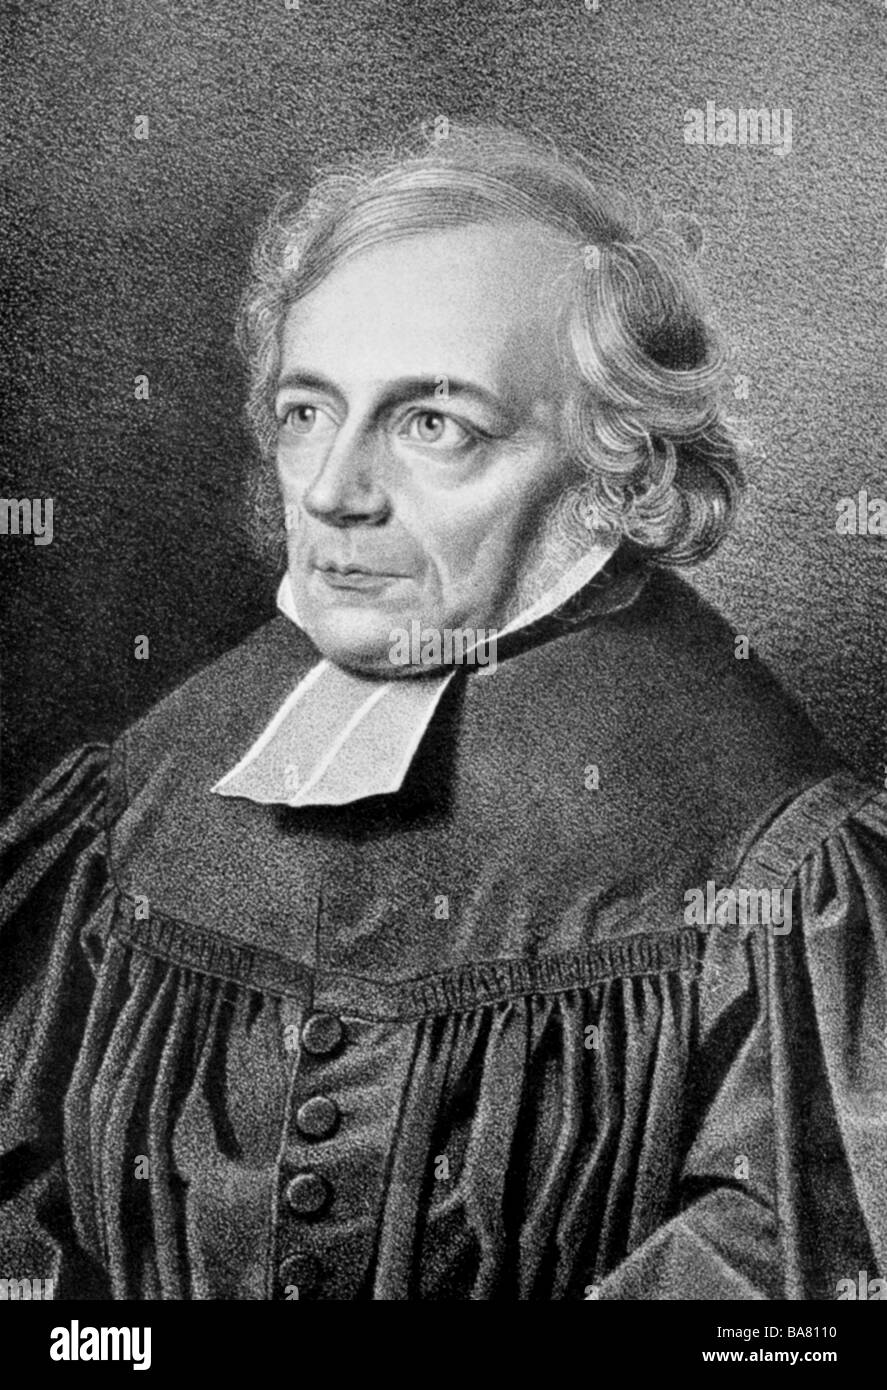 Schleiermacher, Friedrich, 21.11.1768 - 12.2.1834, German theologian and philosopher, portrait, lithograph after drawing by Franz Krueger, circa 1830, , Stock Photo